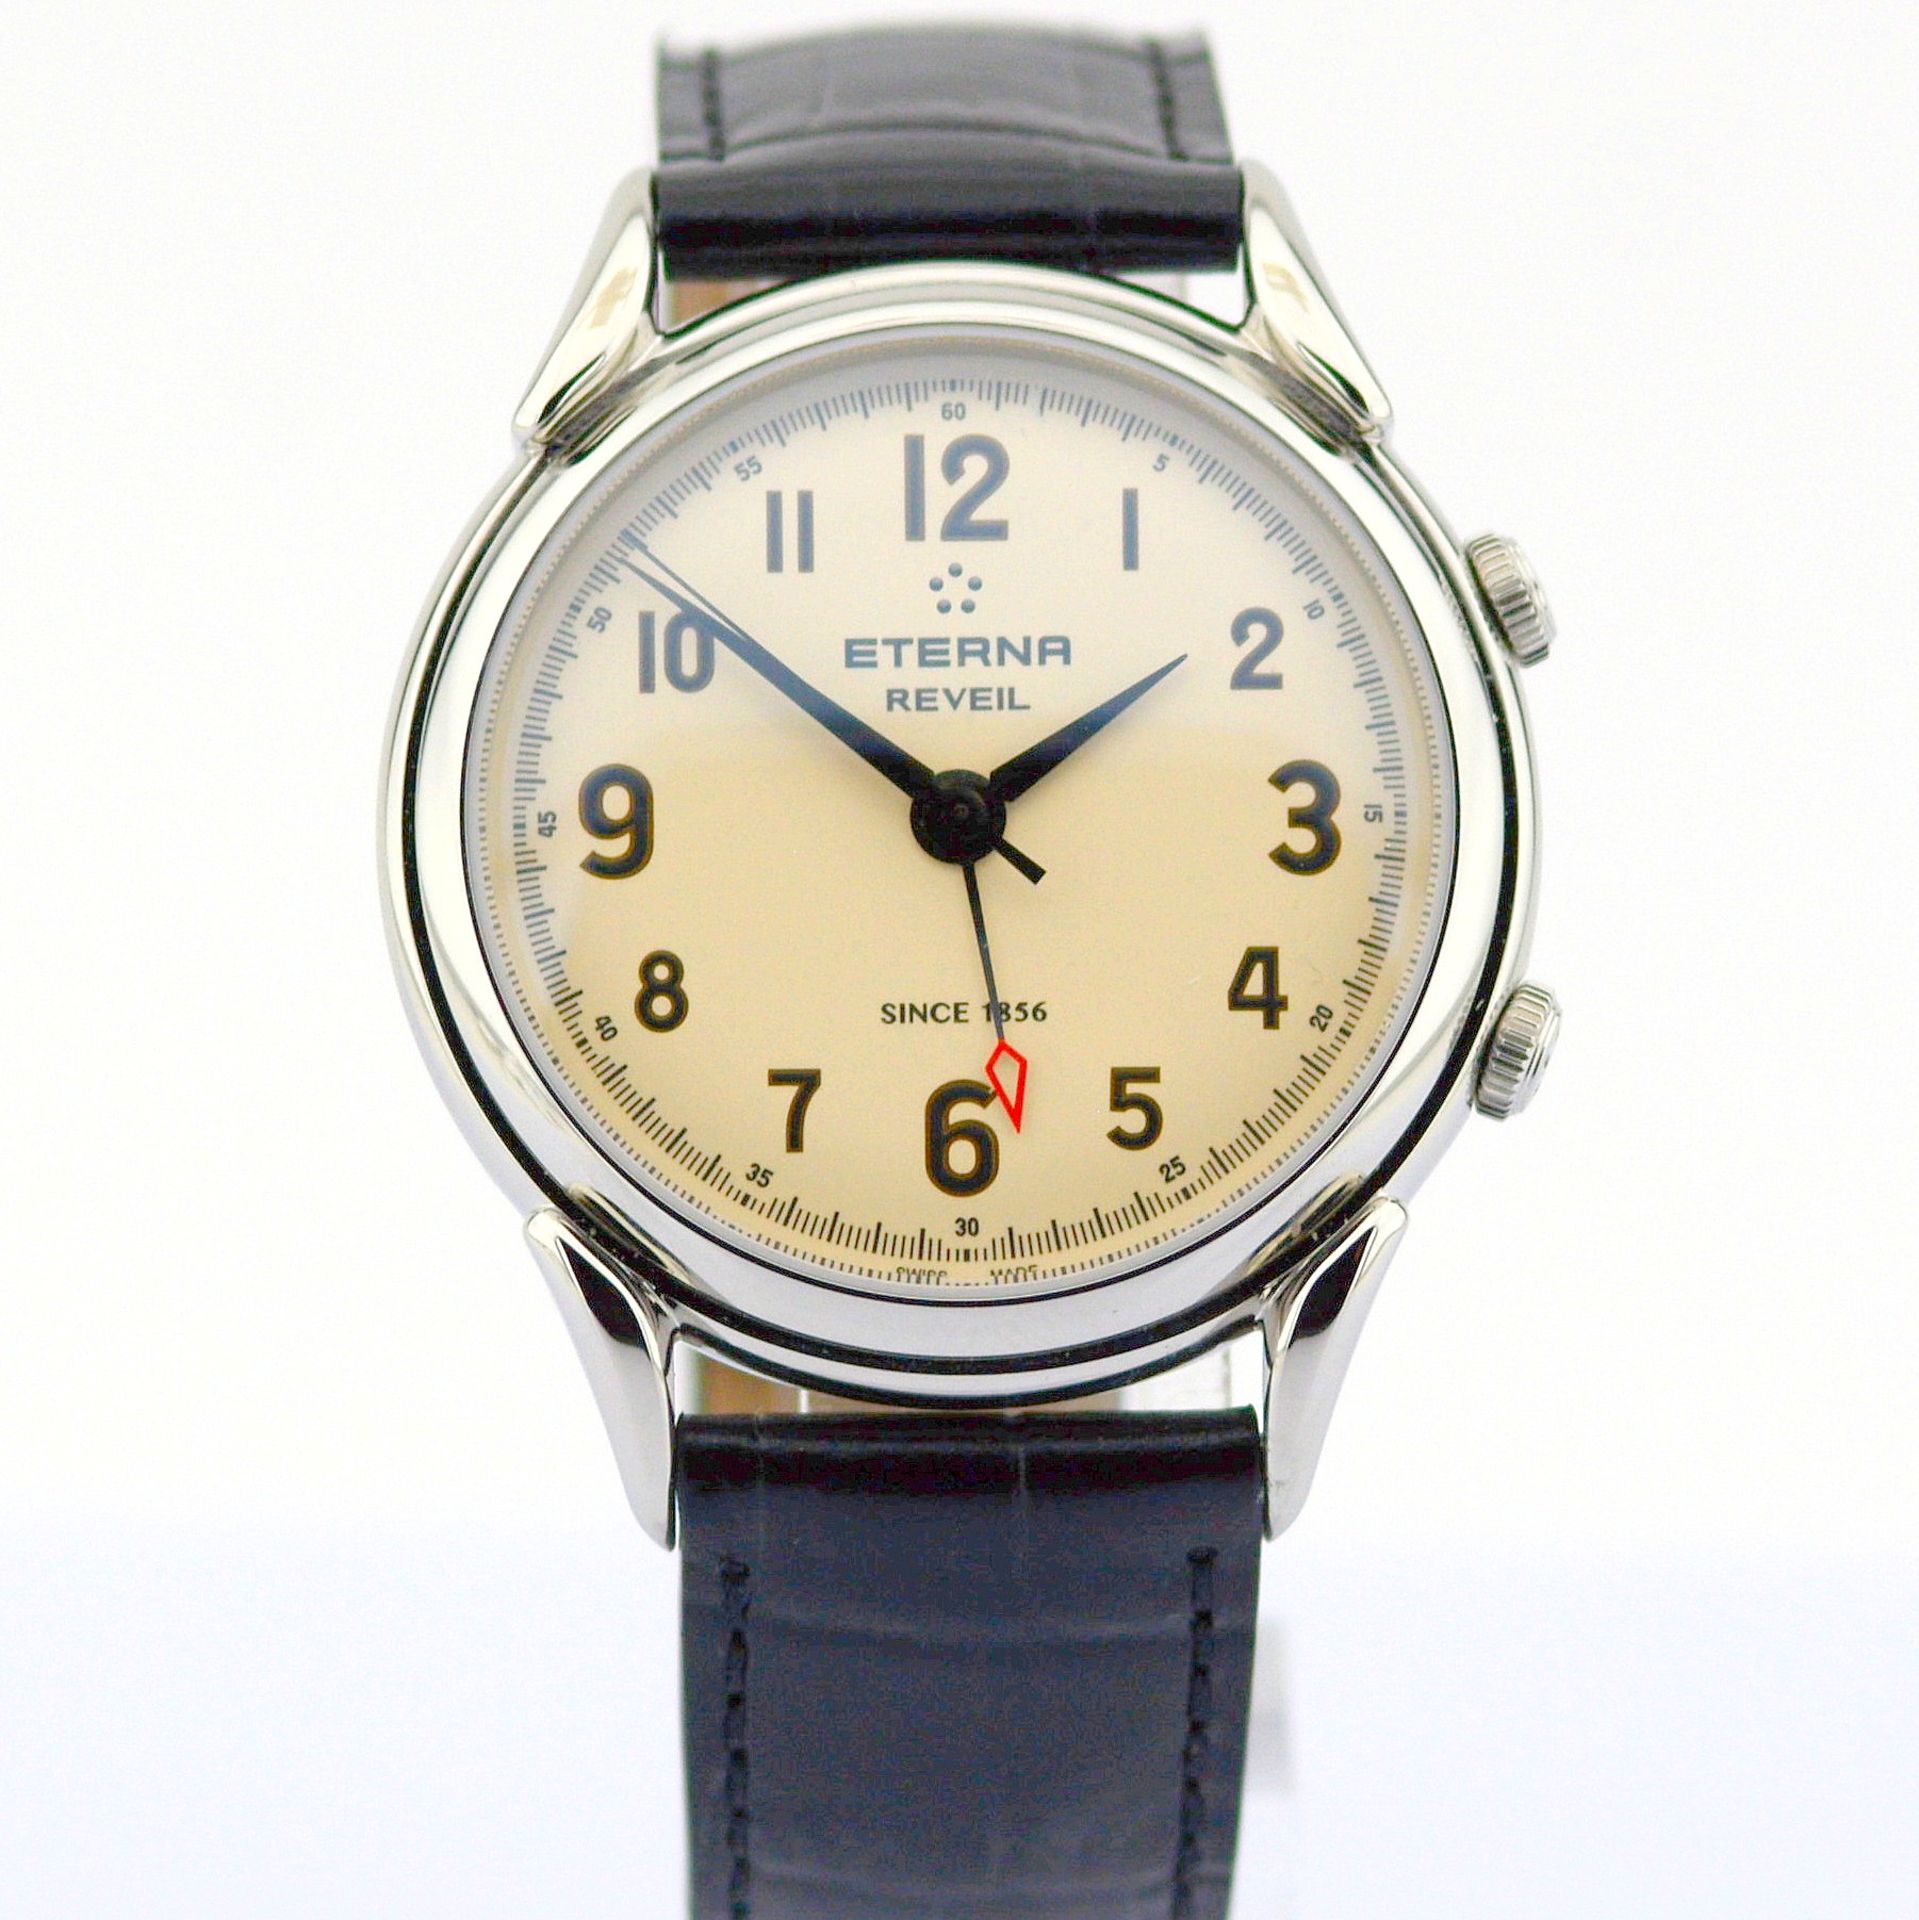 Eterna / Reveil Alarm - Black Strap - Gentlmen's Steel Wrist Watch - Image 2 of 10